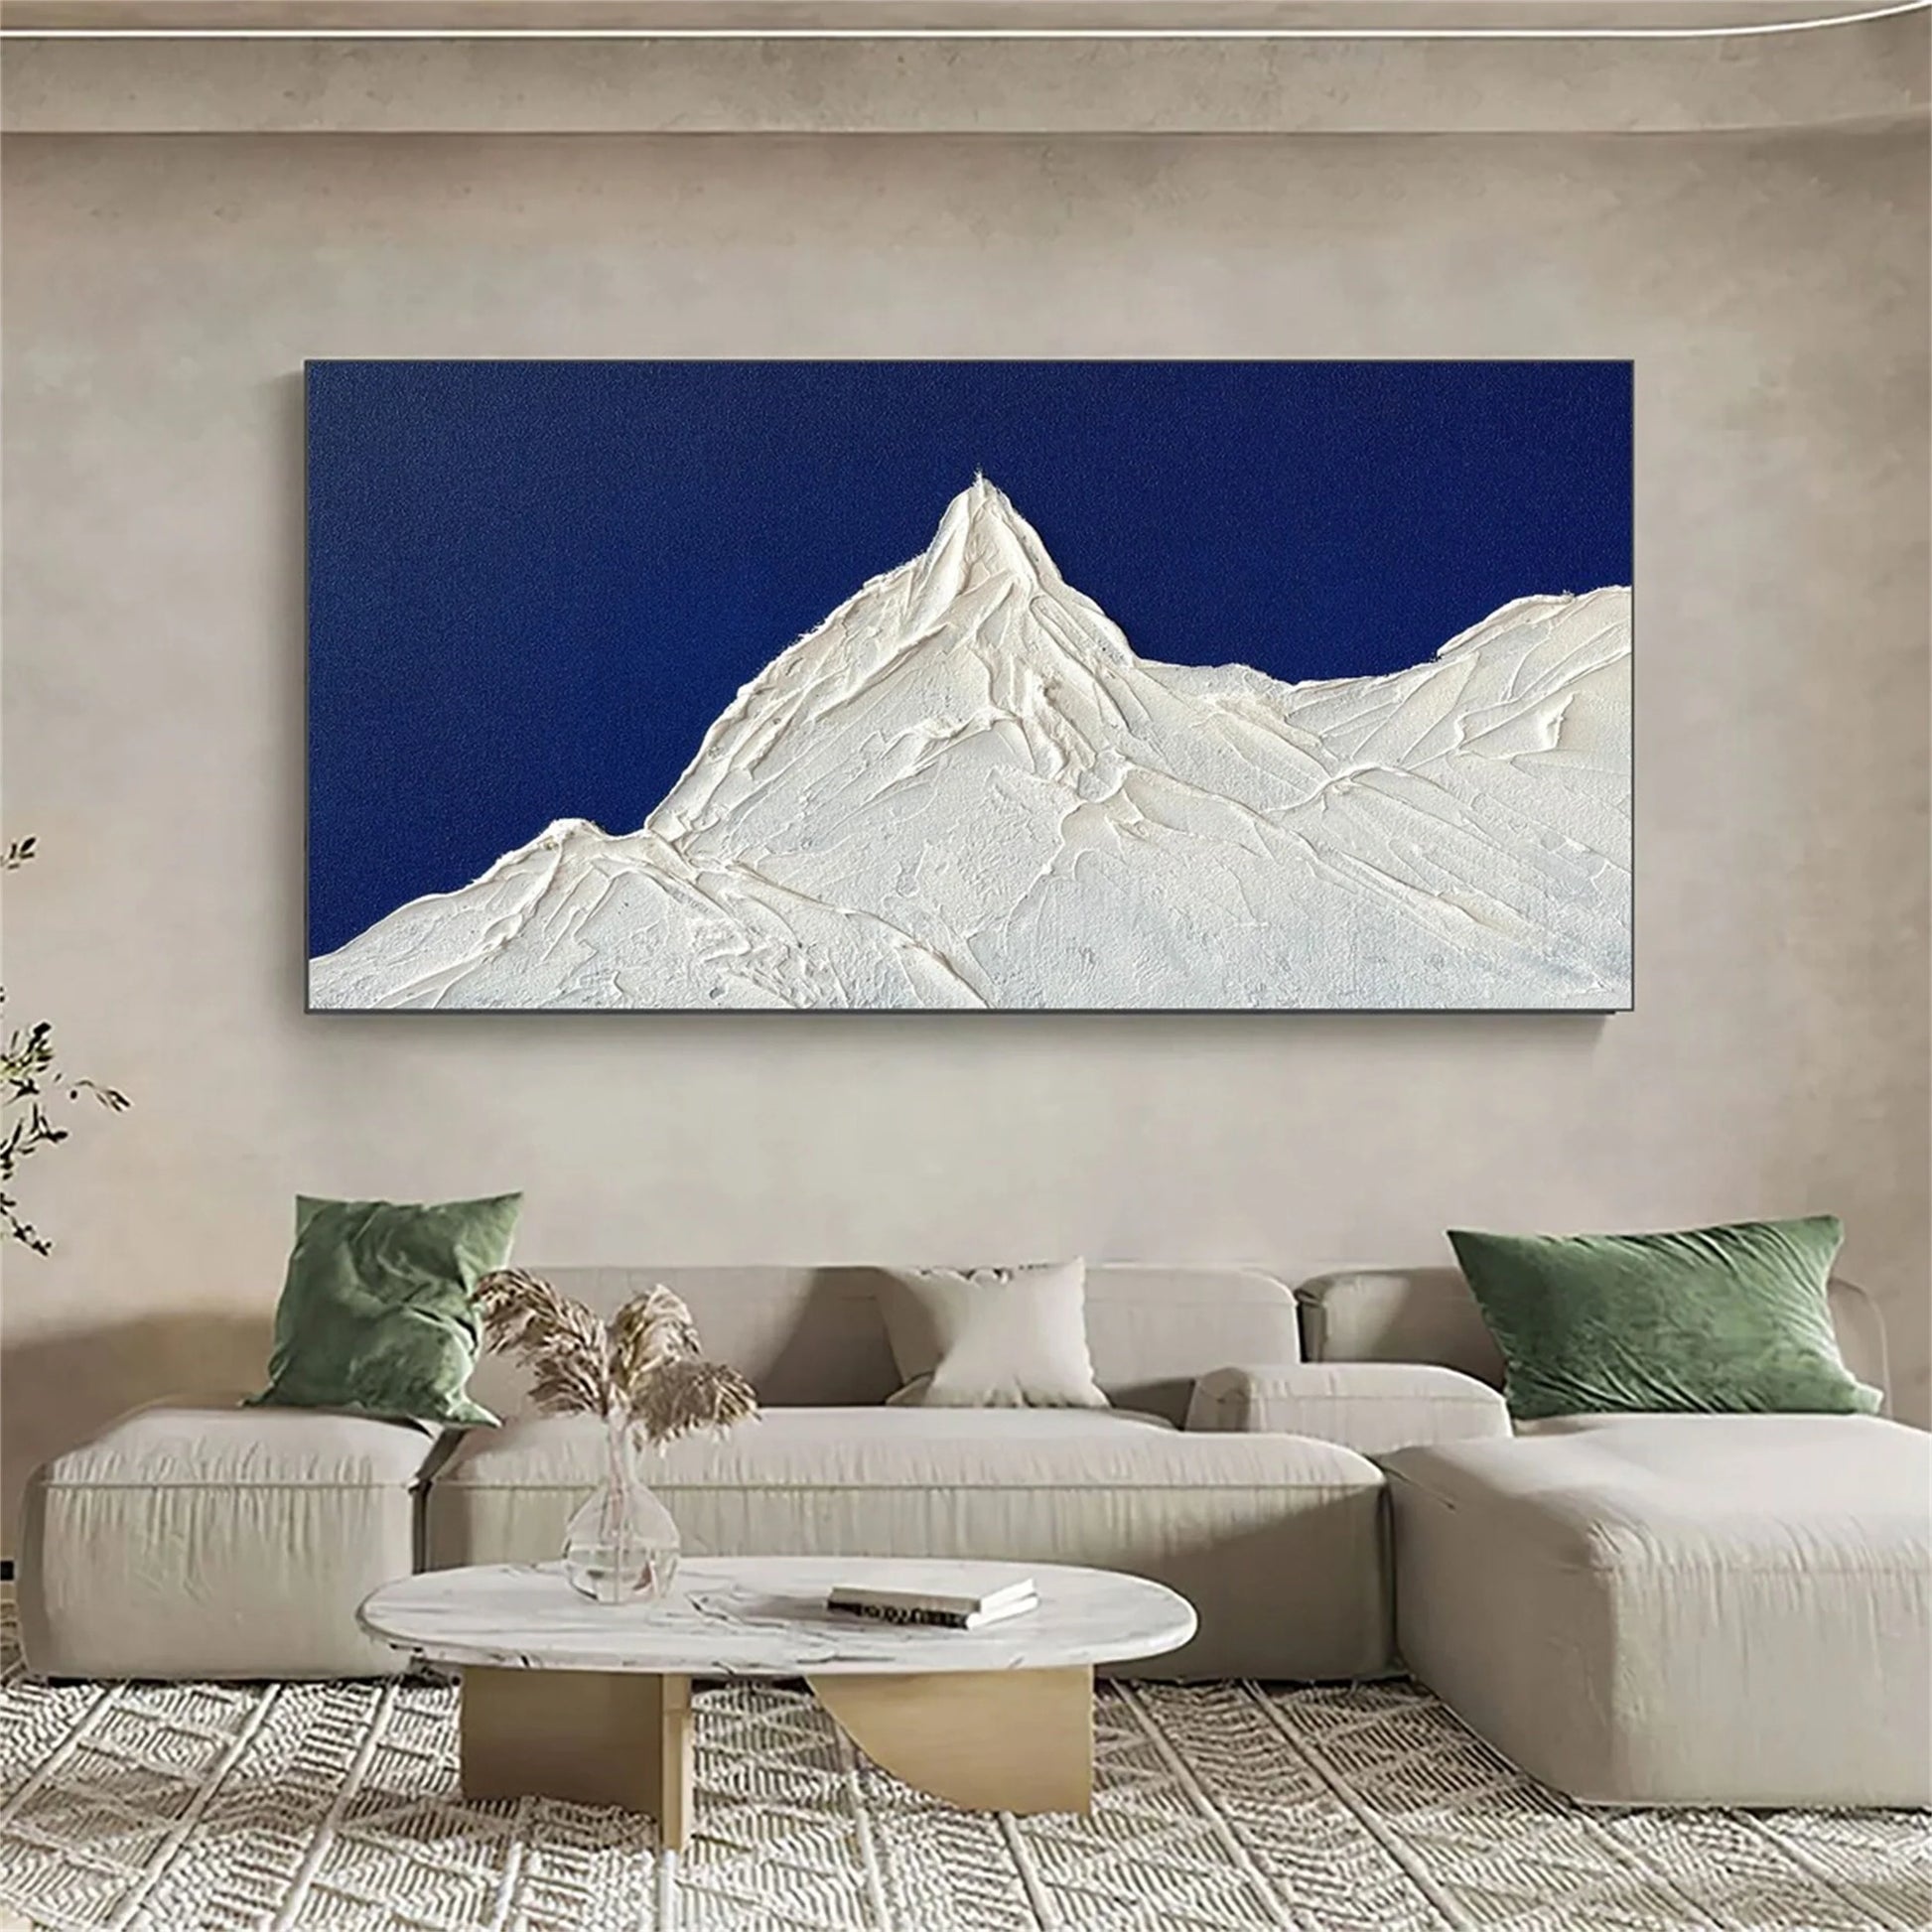 Minimalistic Balance Canvas Painting "Summit of the Stars"